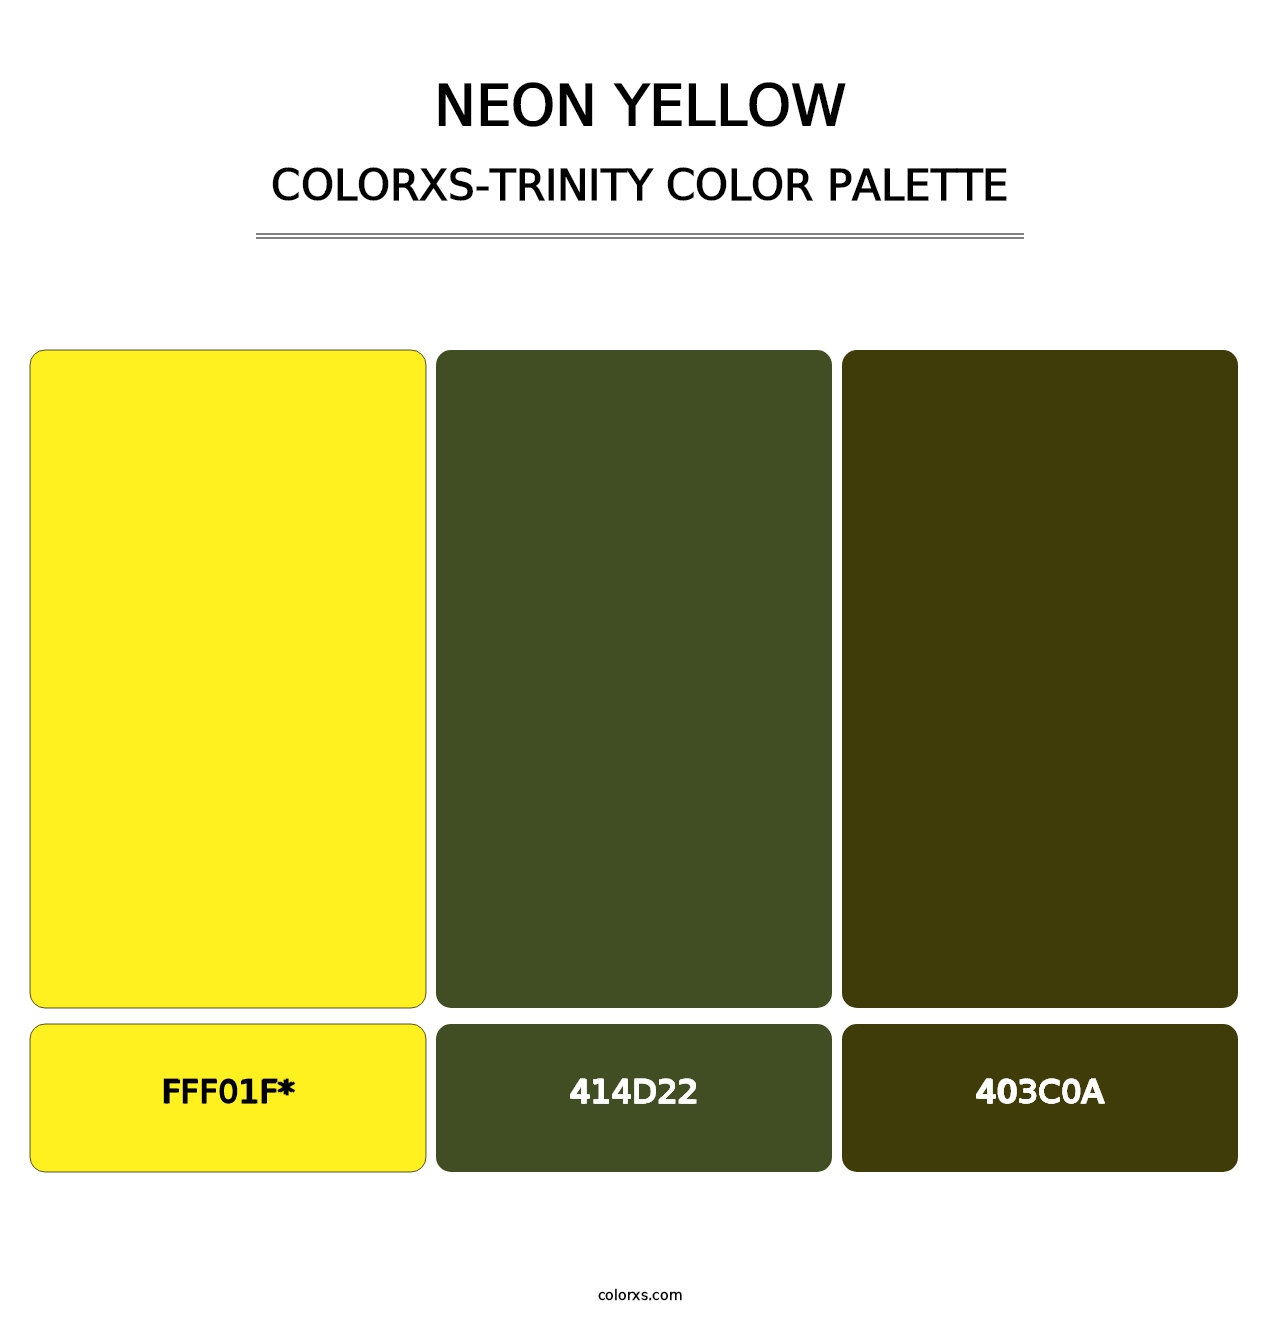 Neon Yellow - Colorxs Trinity Palette